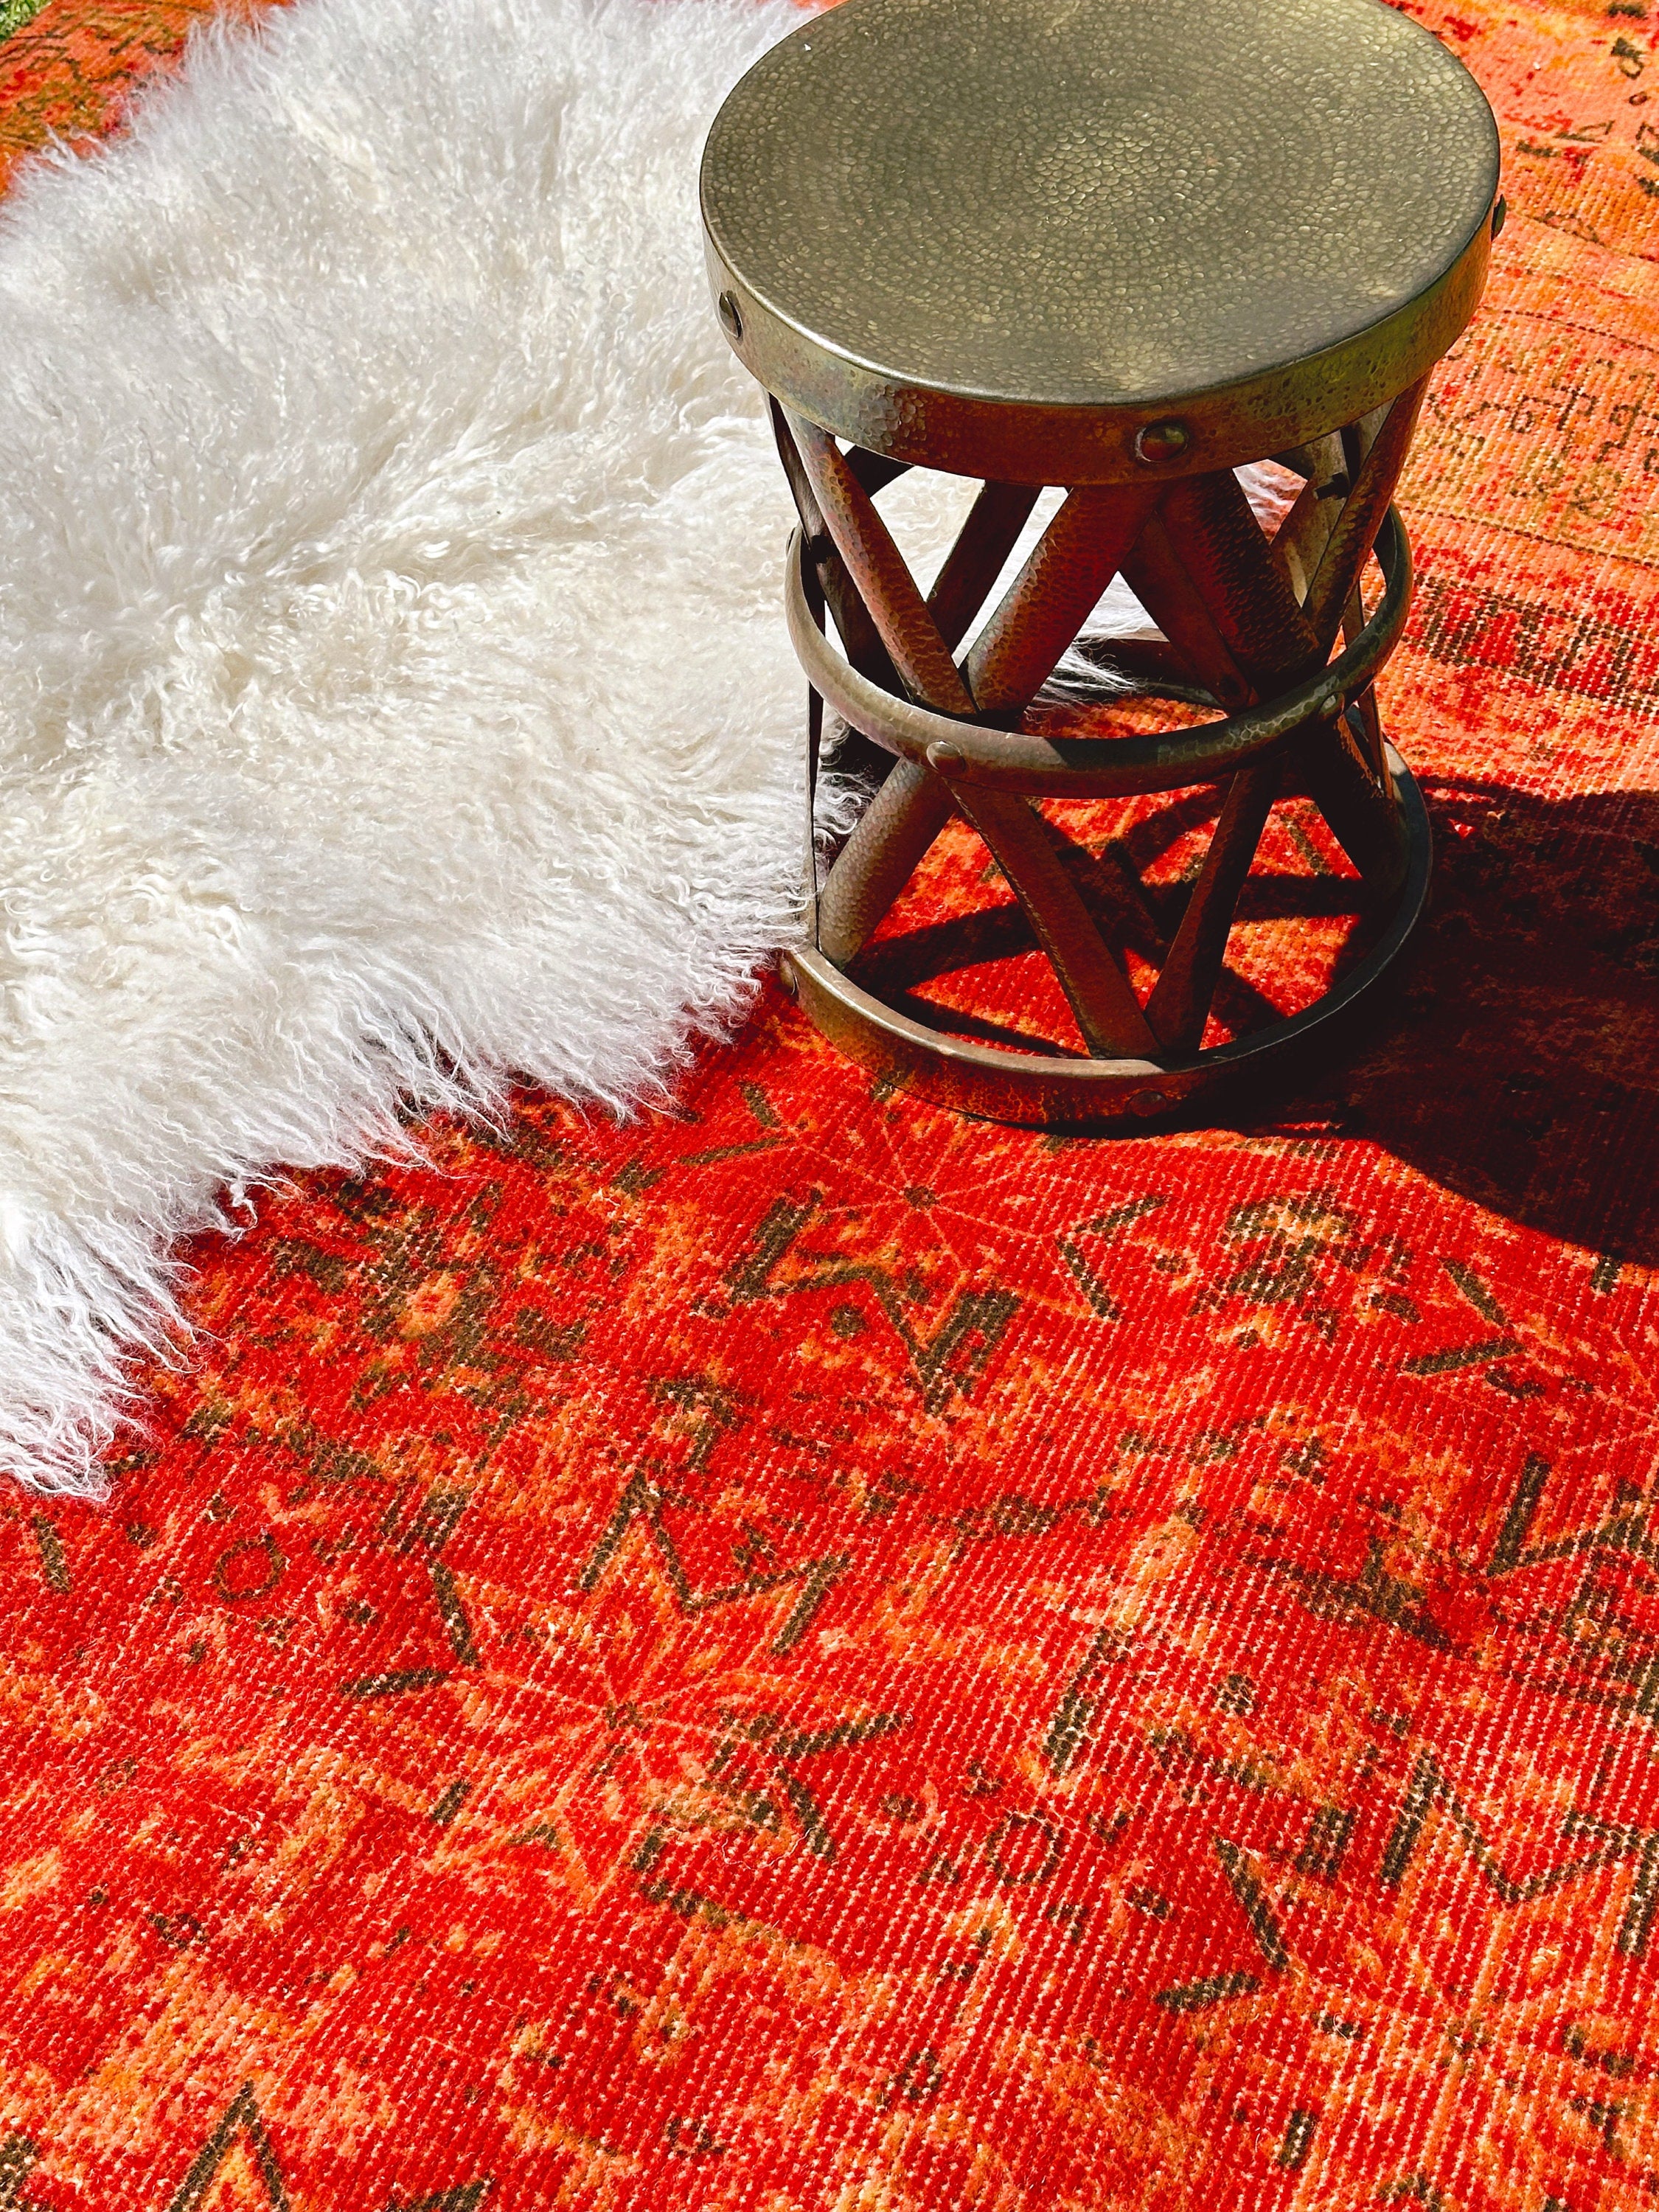 Vintage Inspired Wool Rug in Red and Orange Gradient 8x4.5 ft | Boho Chic Modern Multicolor Geometric Pattern Living Room Area Rug